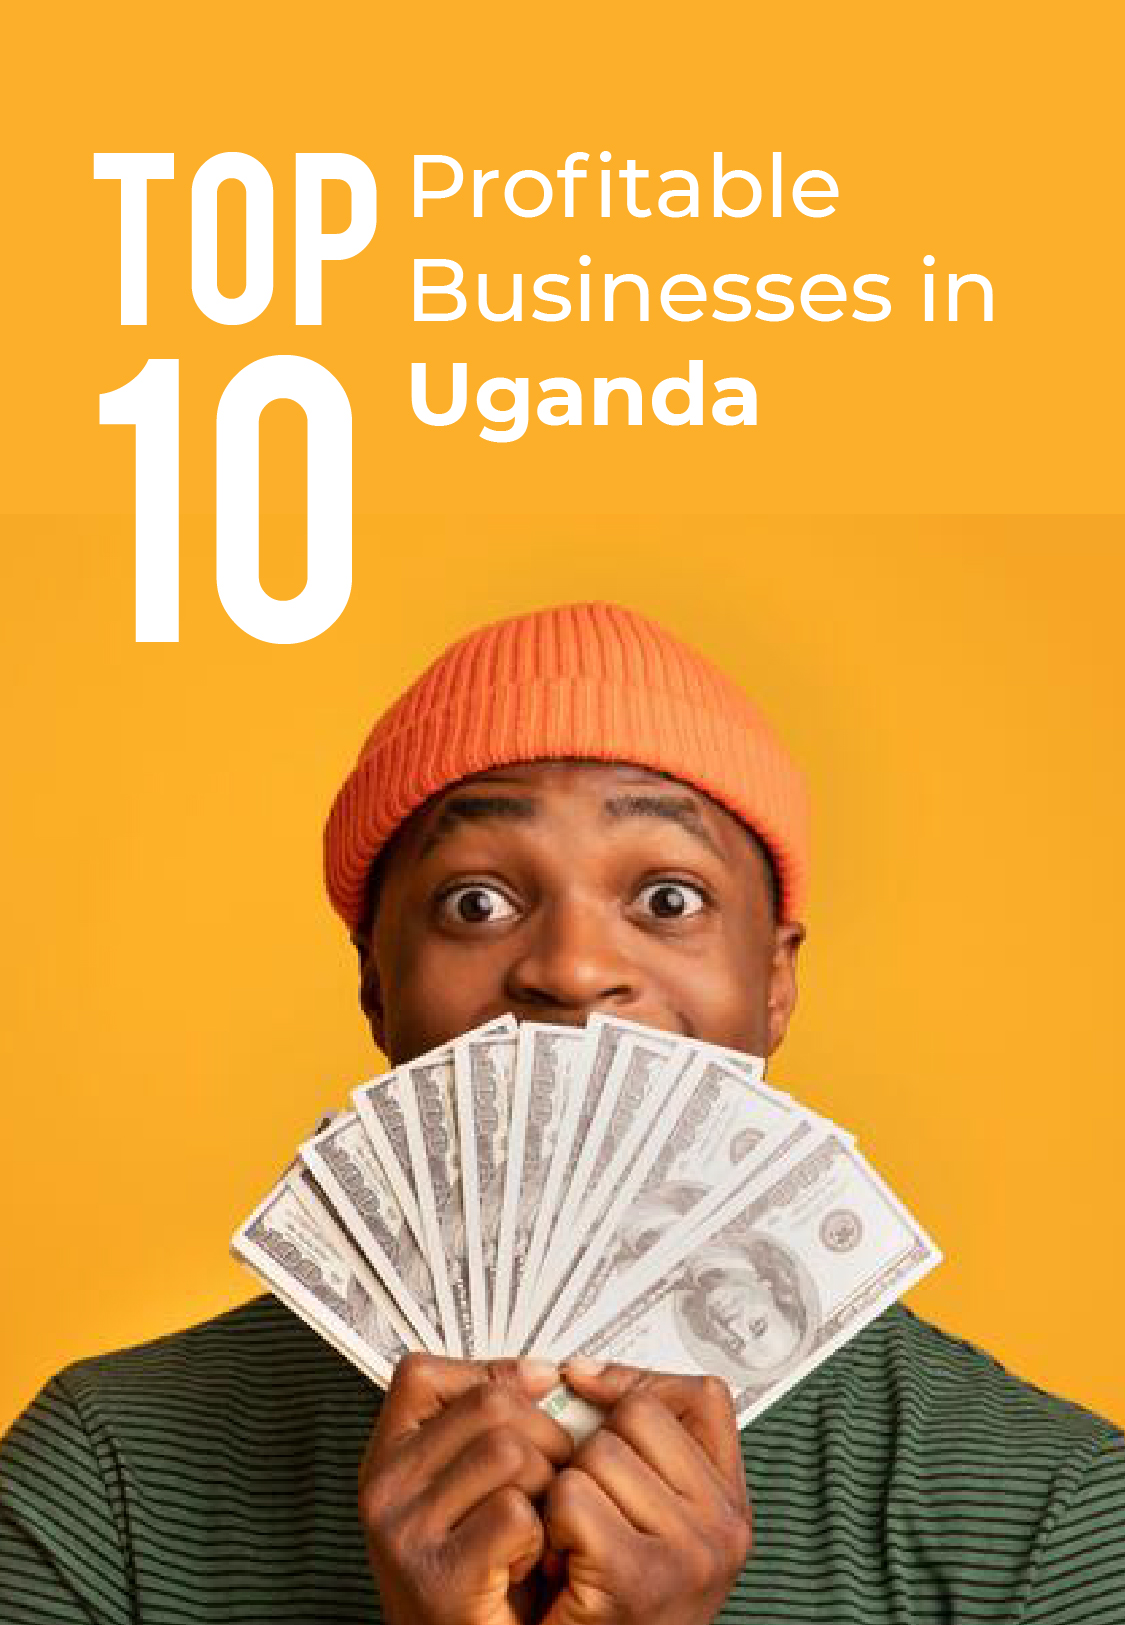 Top 10 profitable businesses in Uganda